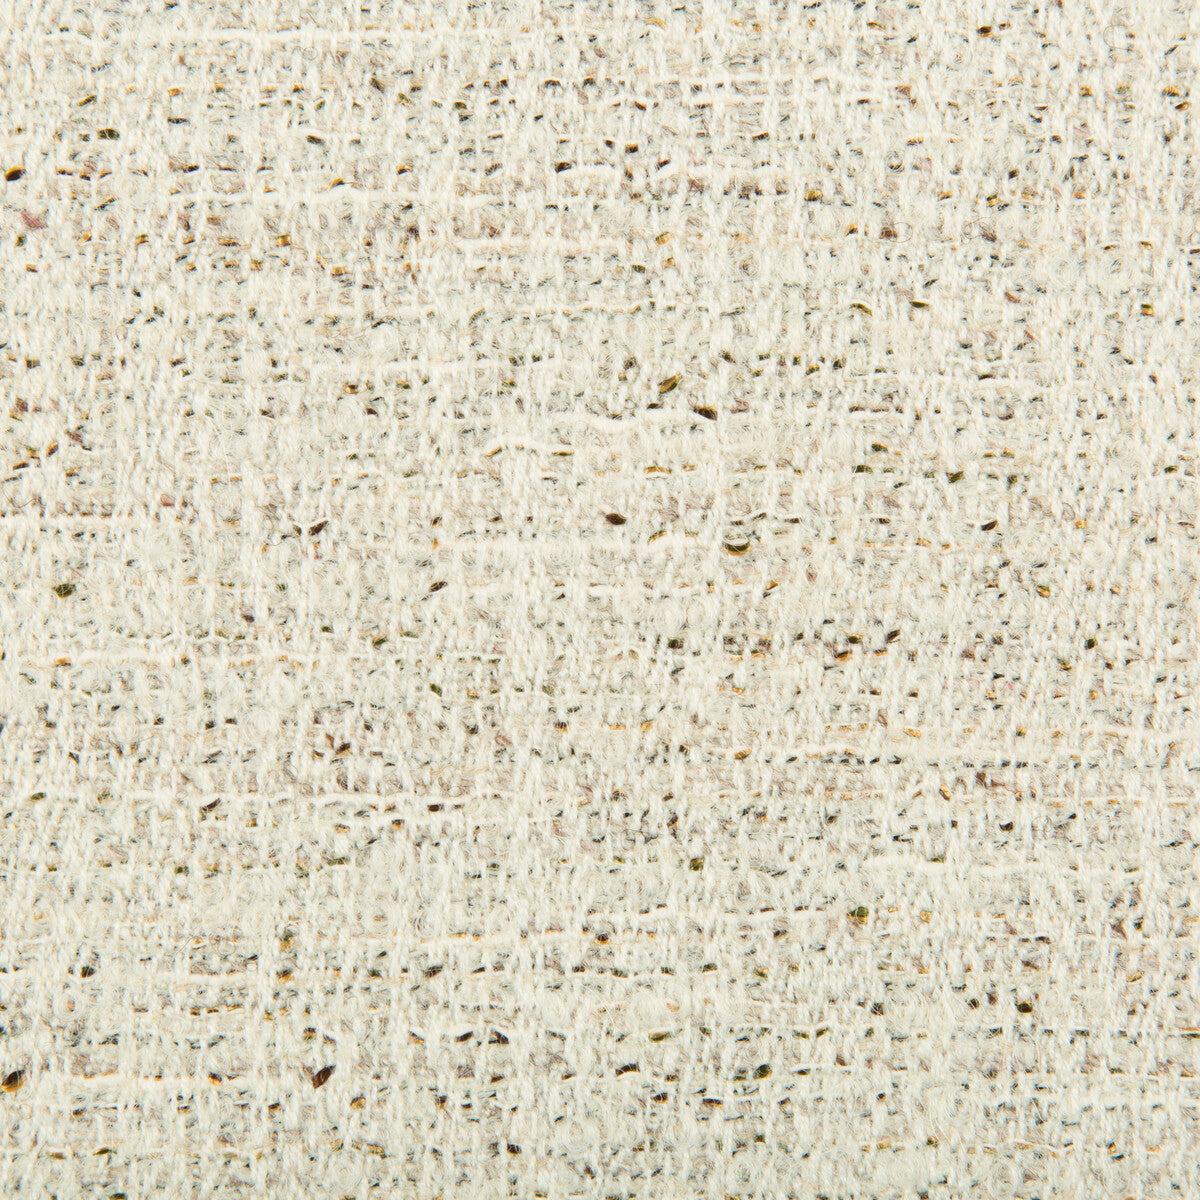 Pealara fabric in crudo color - pattern LCT5457.001.0 - by Gaston y Daniela in the Lorenzo Castillo IV collection